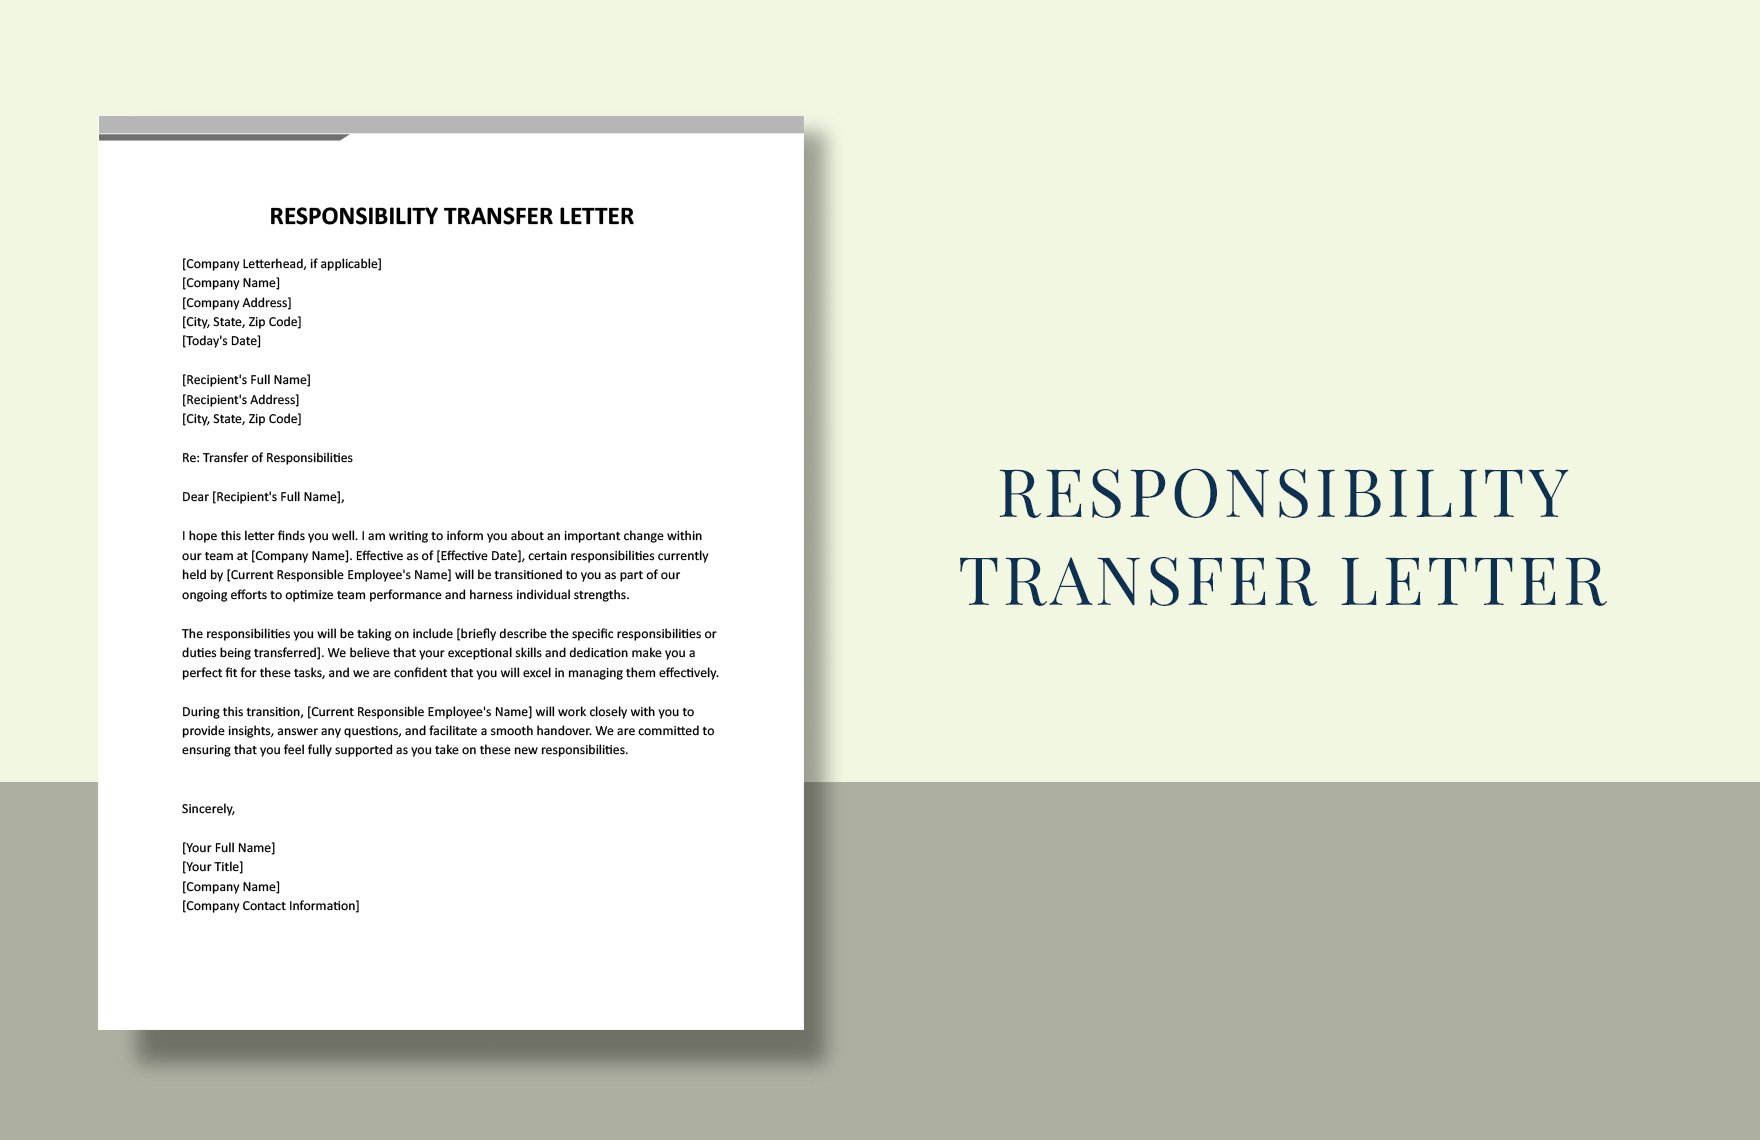 Responsibility Transfer Letter in Word, Google Docs